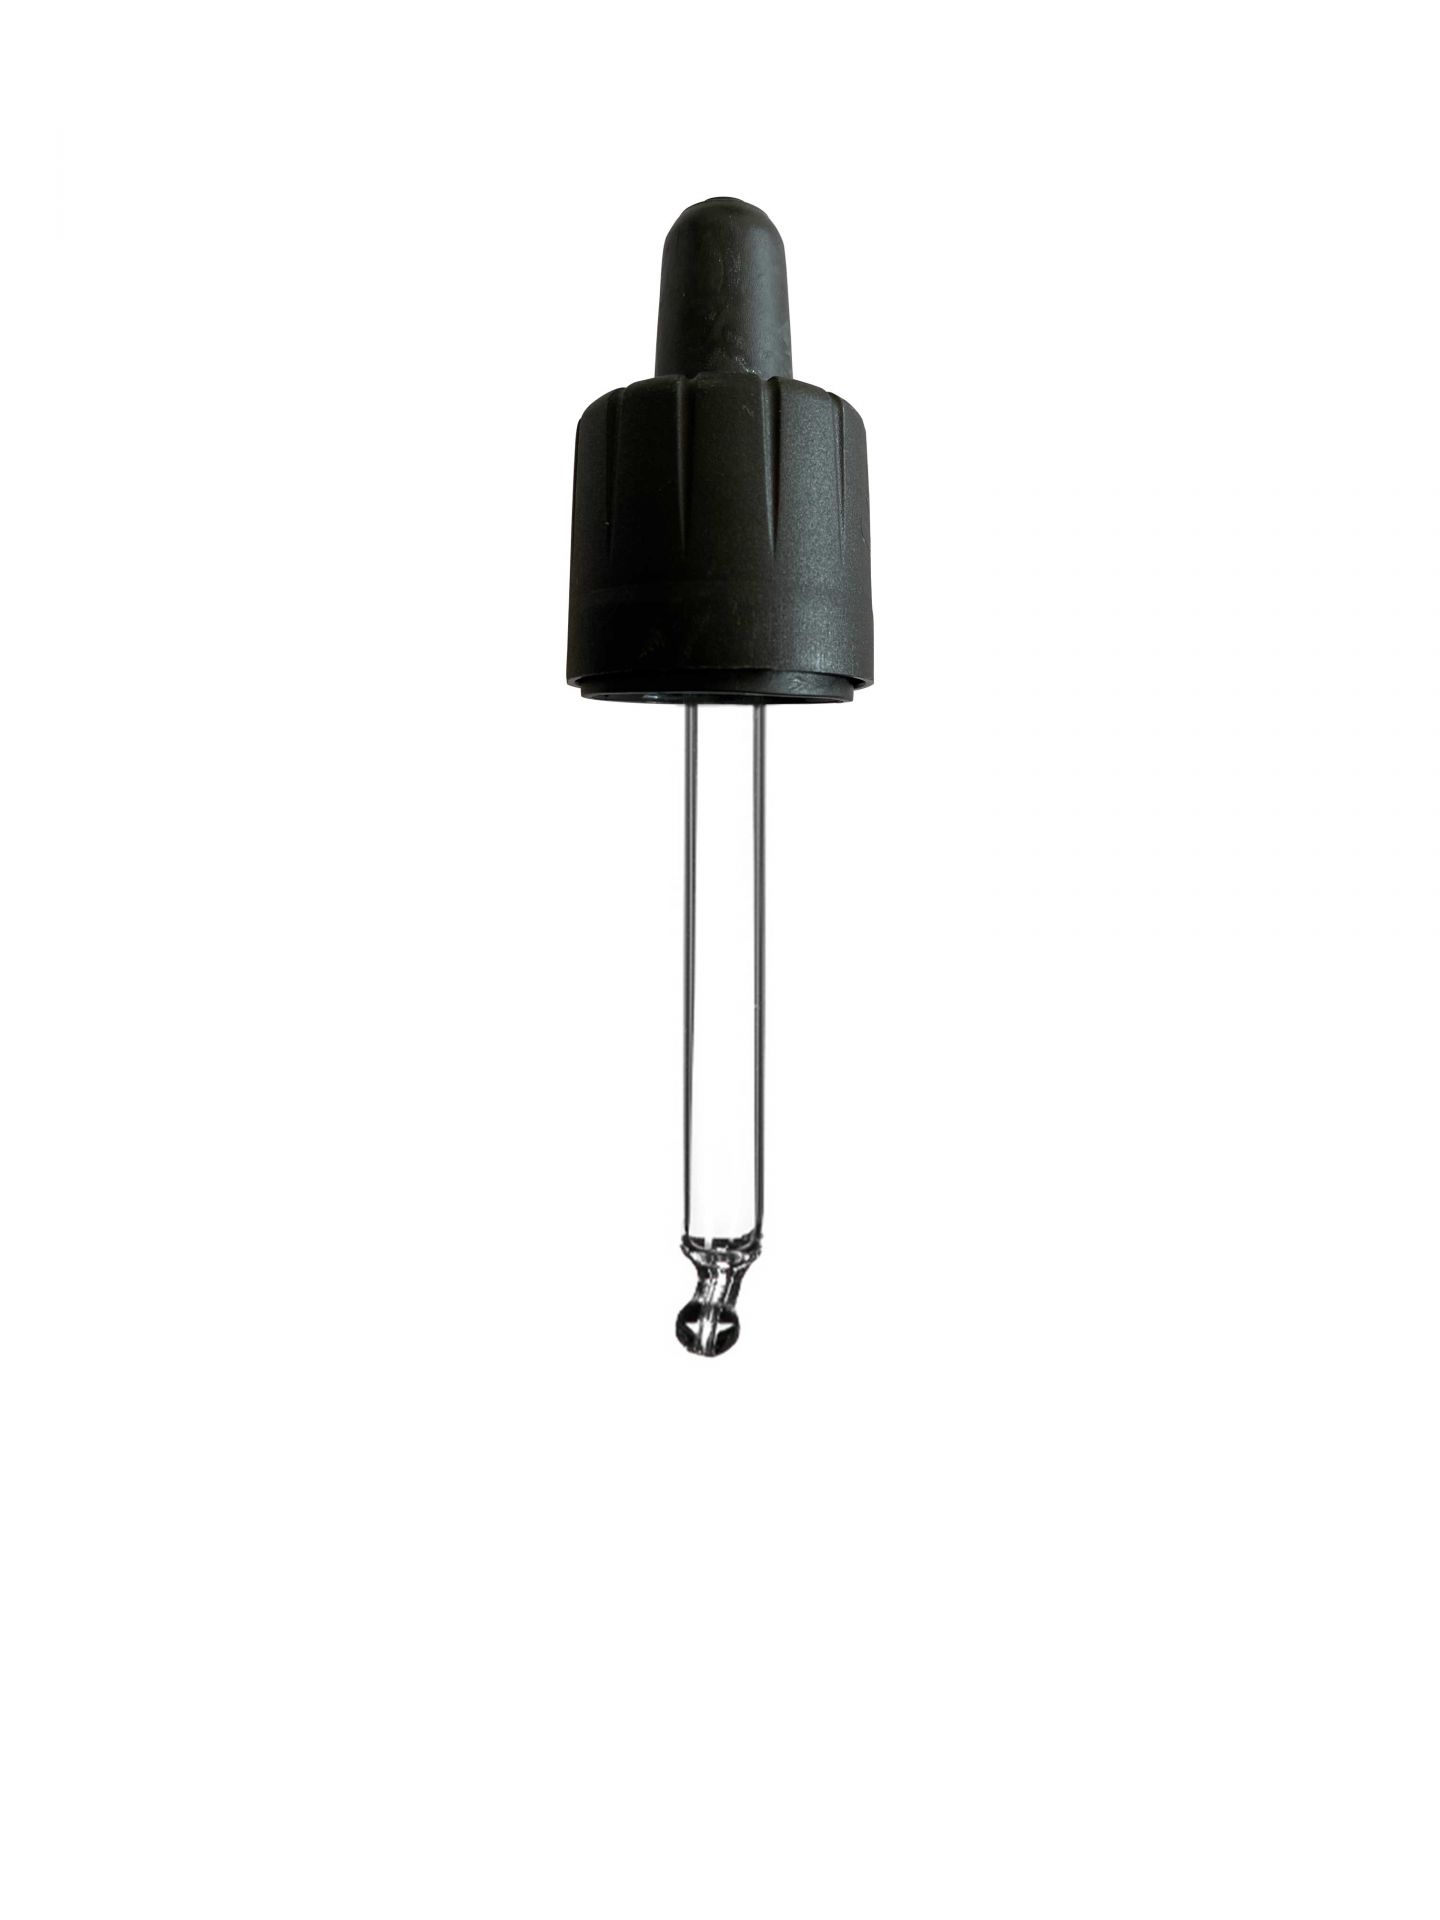 Pipette child-tamper evident DIN18, II, black, bulb TPE, dose 0.7ml, bent ball tip (Orion 20)   